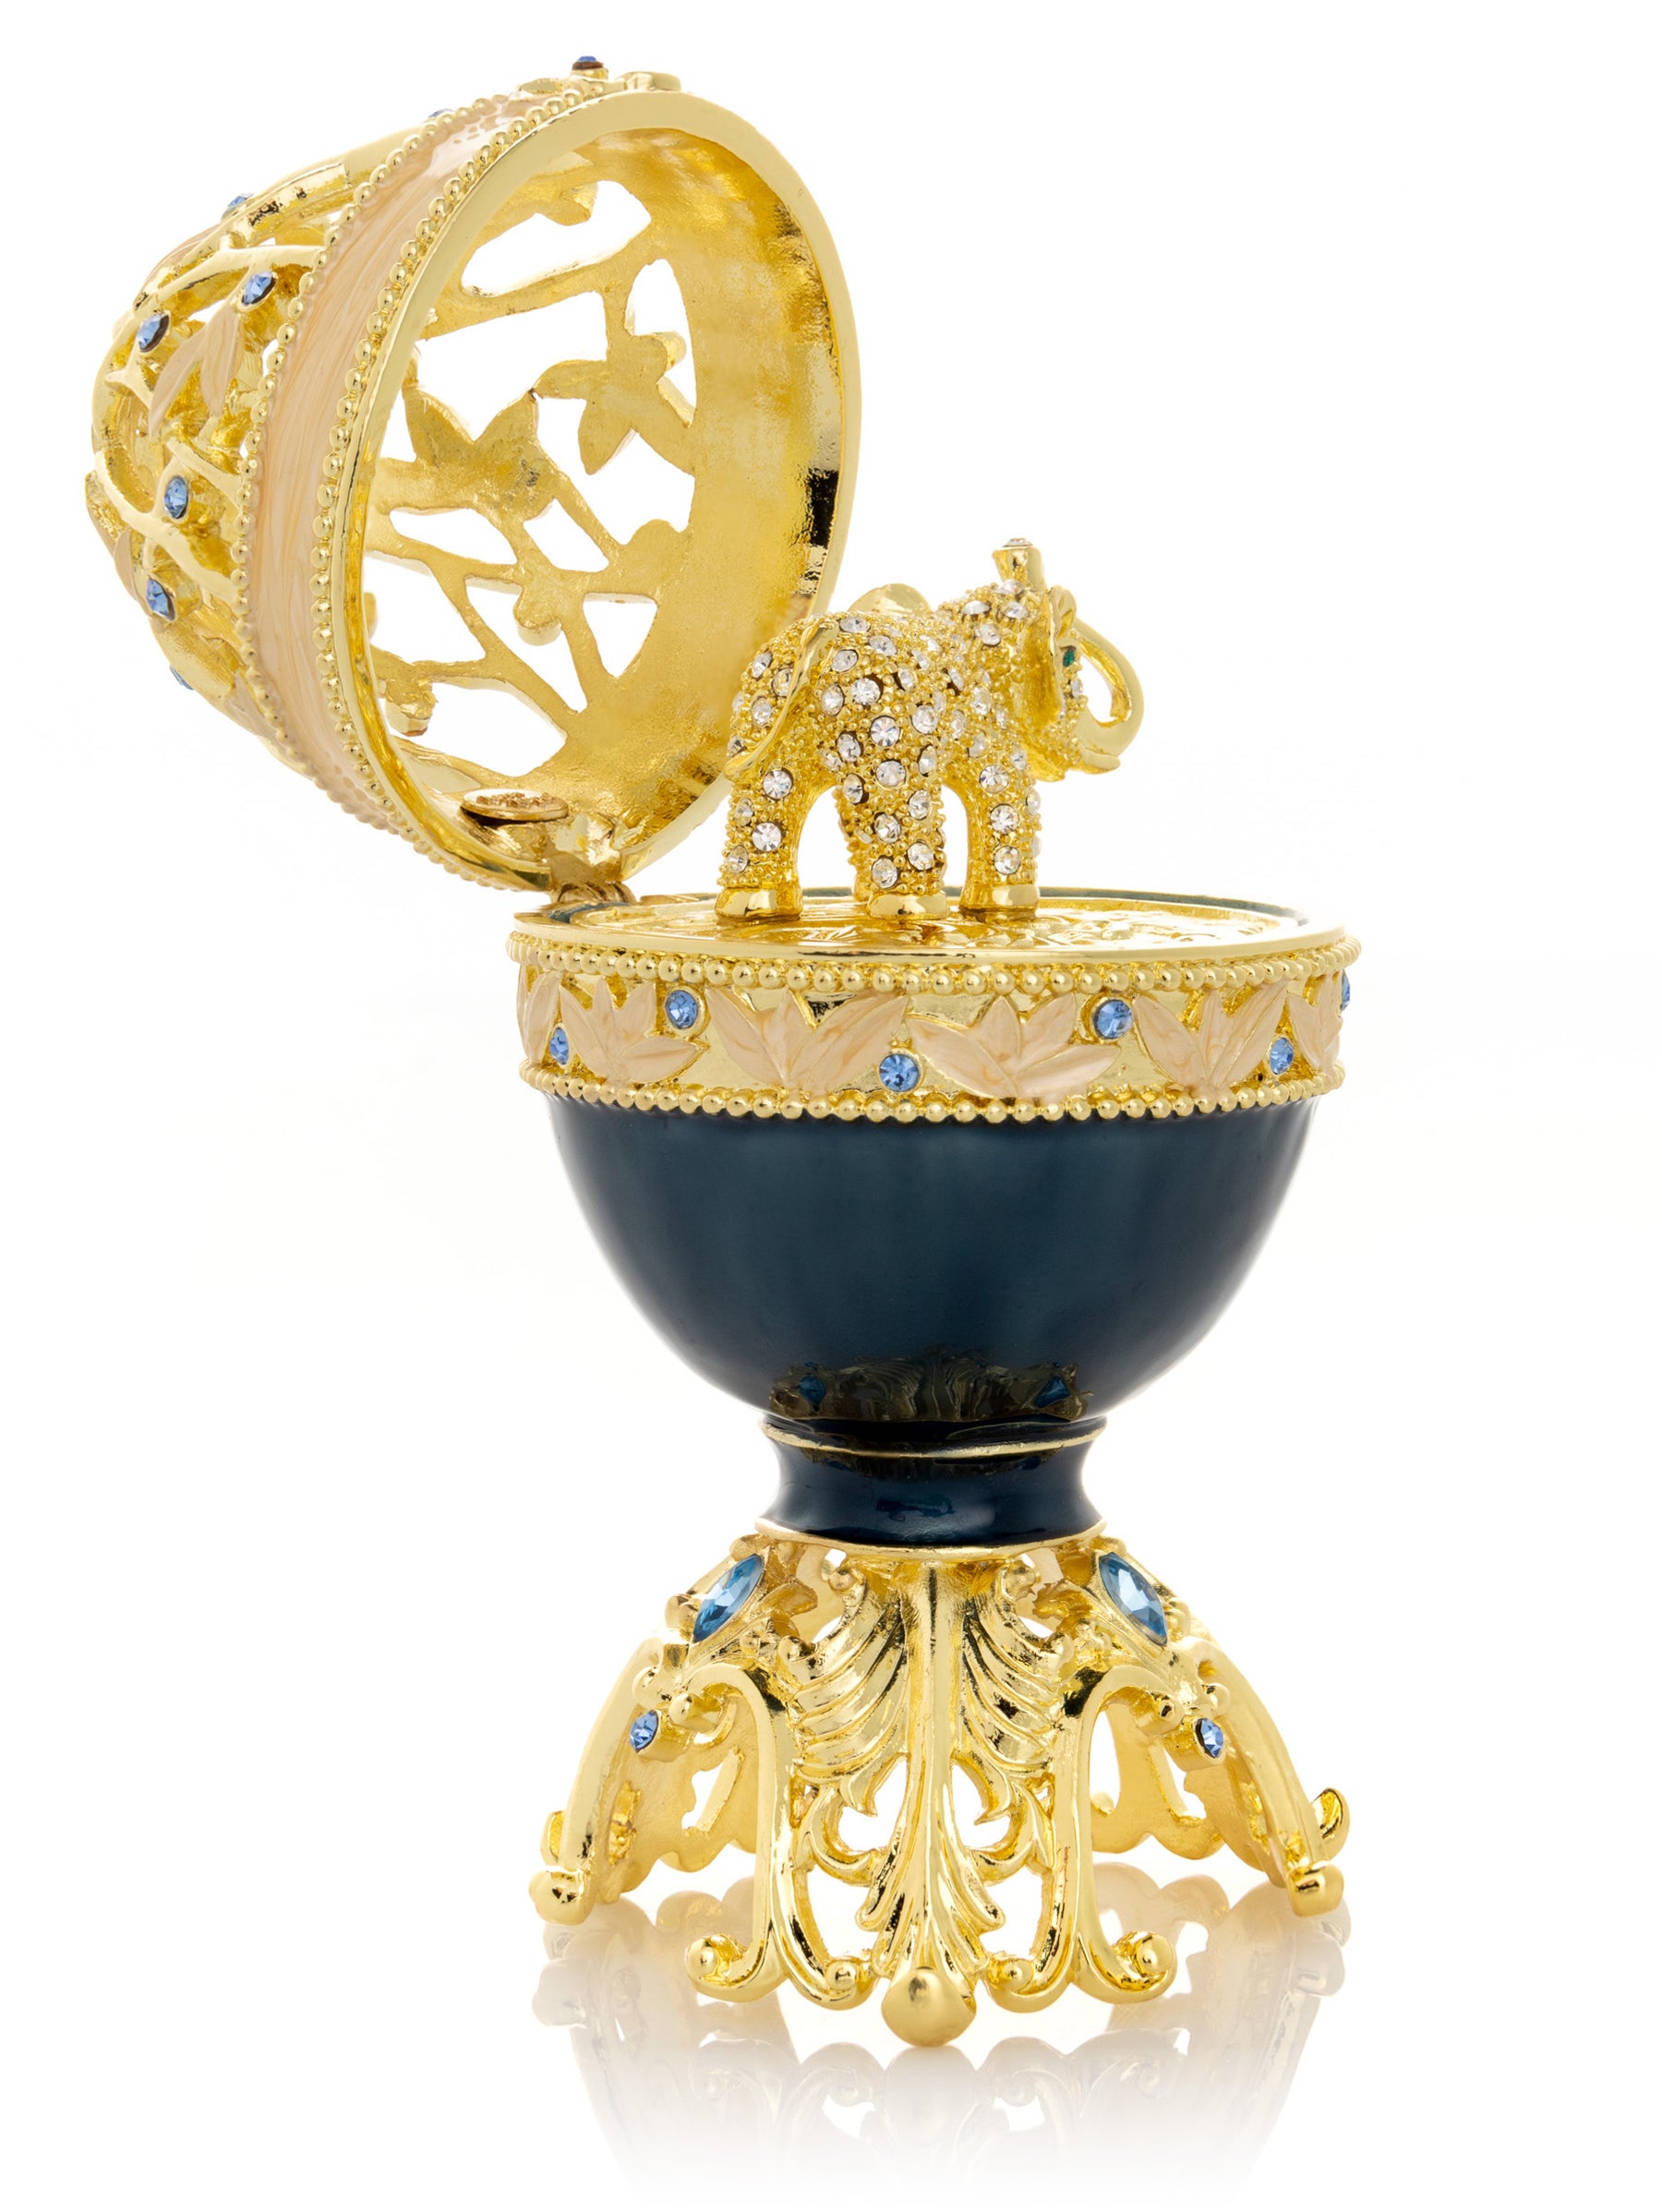 Goldenes blaues Fabergé-Ei mit einem goldenen Elefanten